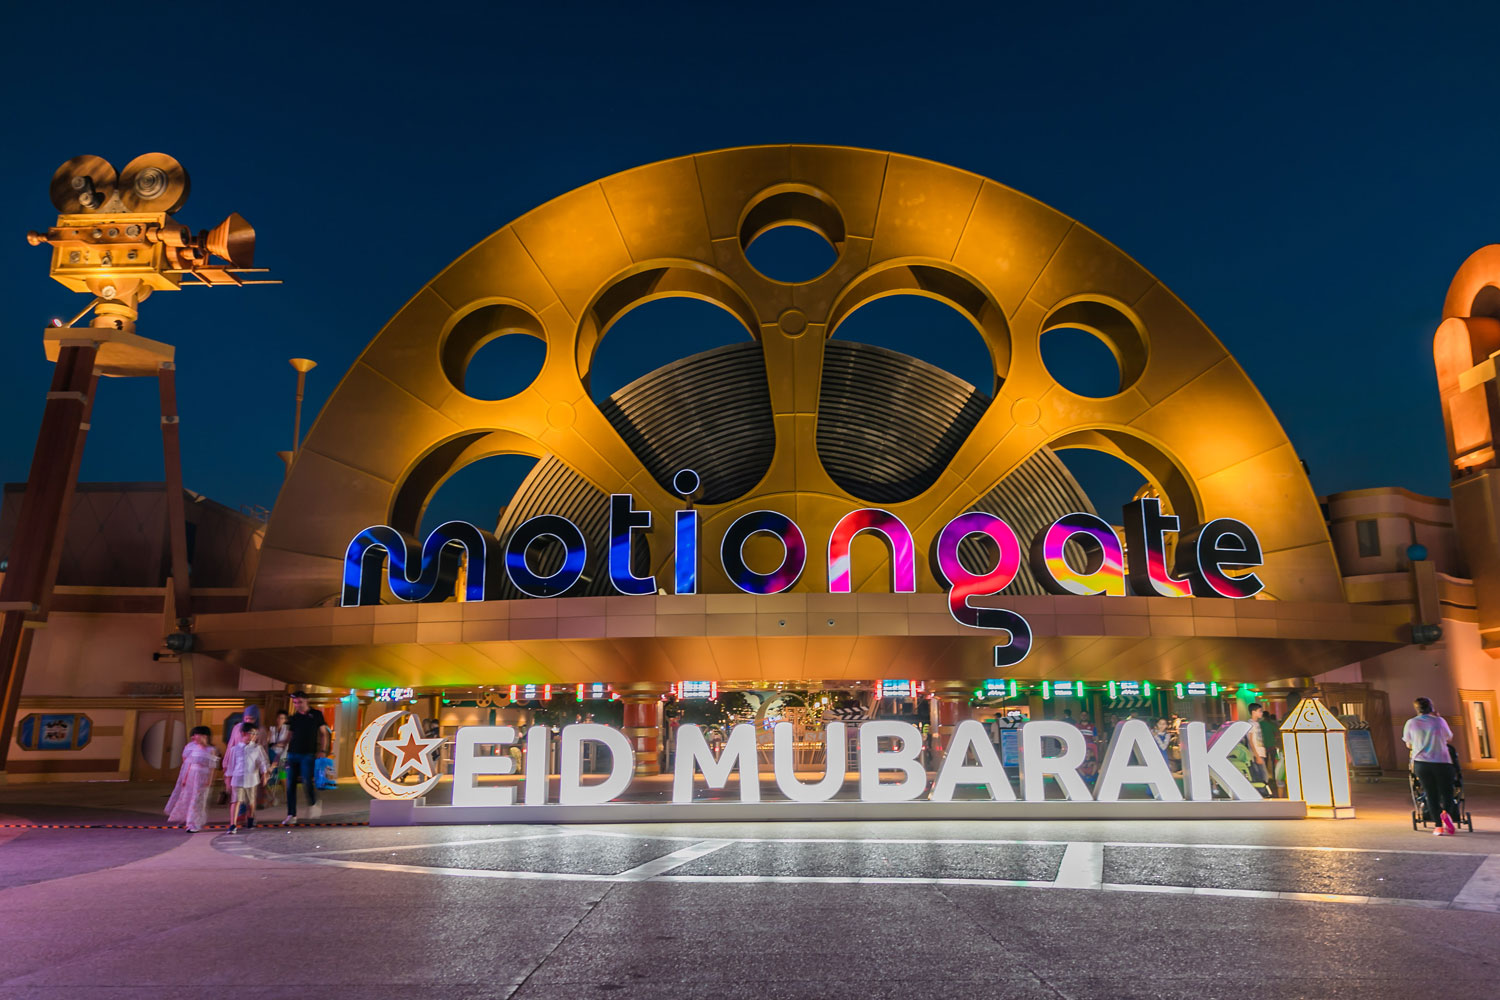 Motiongate Dubai celebrates Eid alAdha with unlimited rides Things